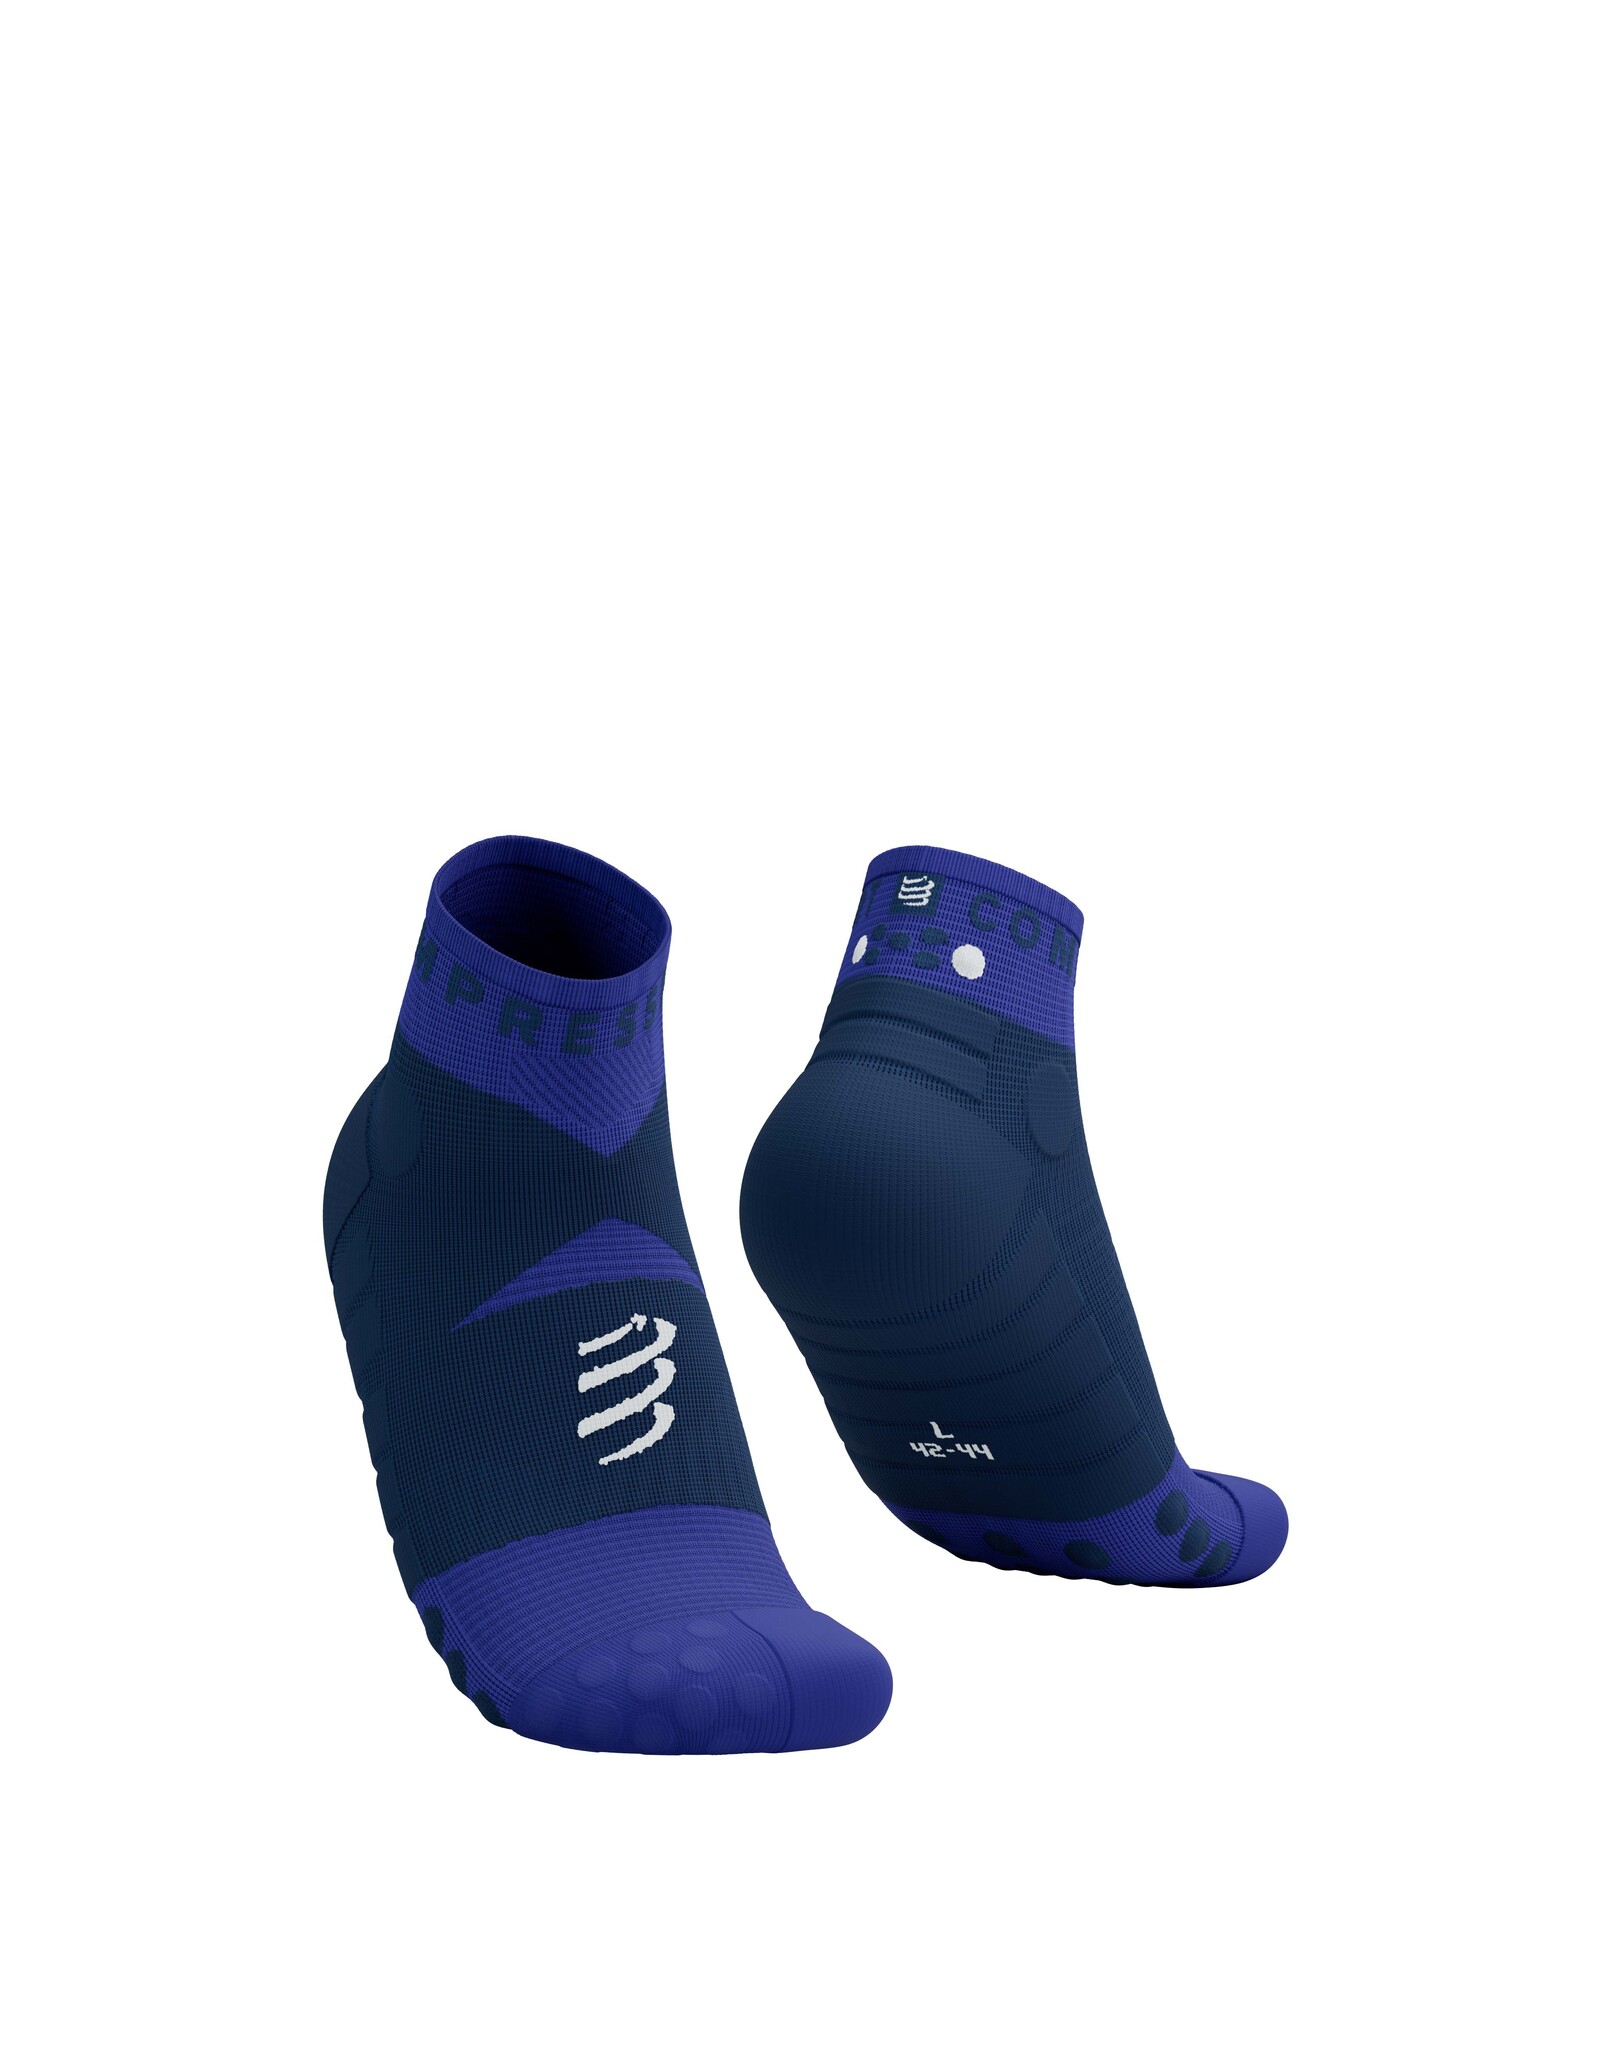 Compressport Ultra Trail Low Socks - Dazzling Blue/Dress Blues/White